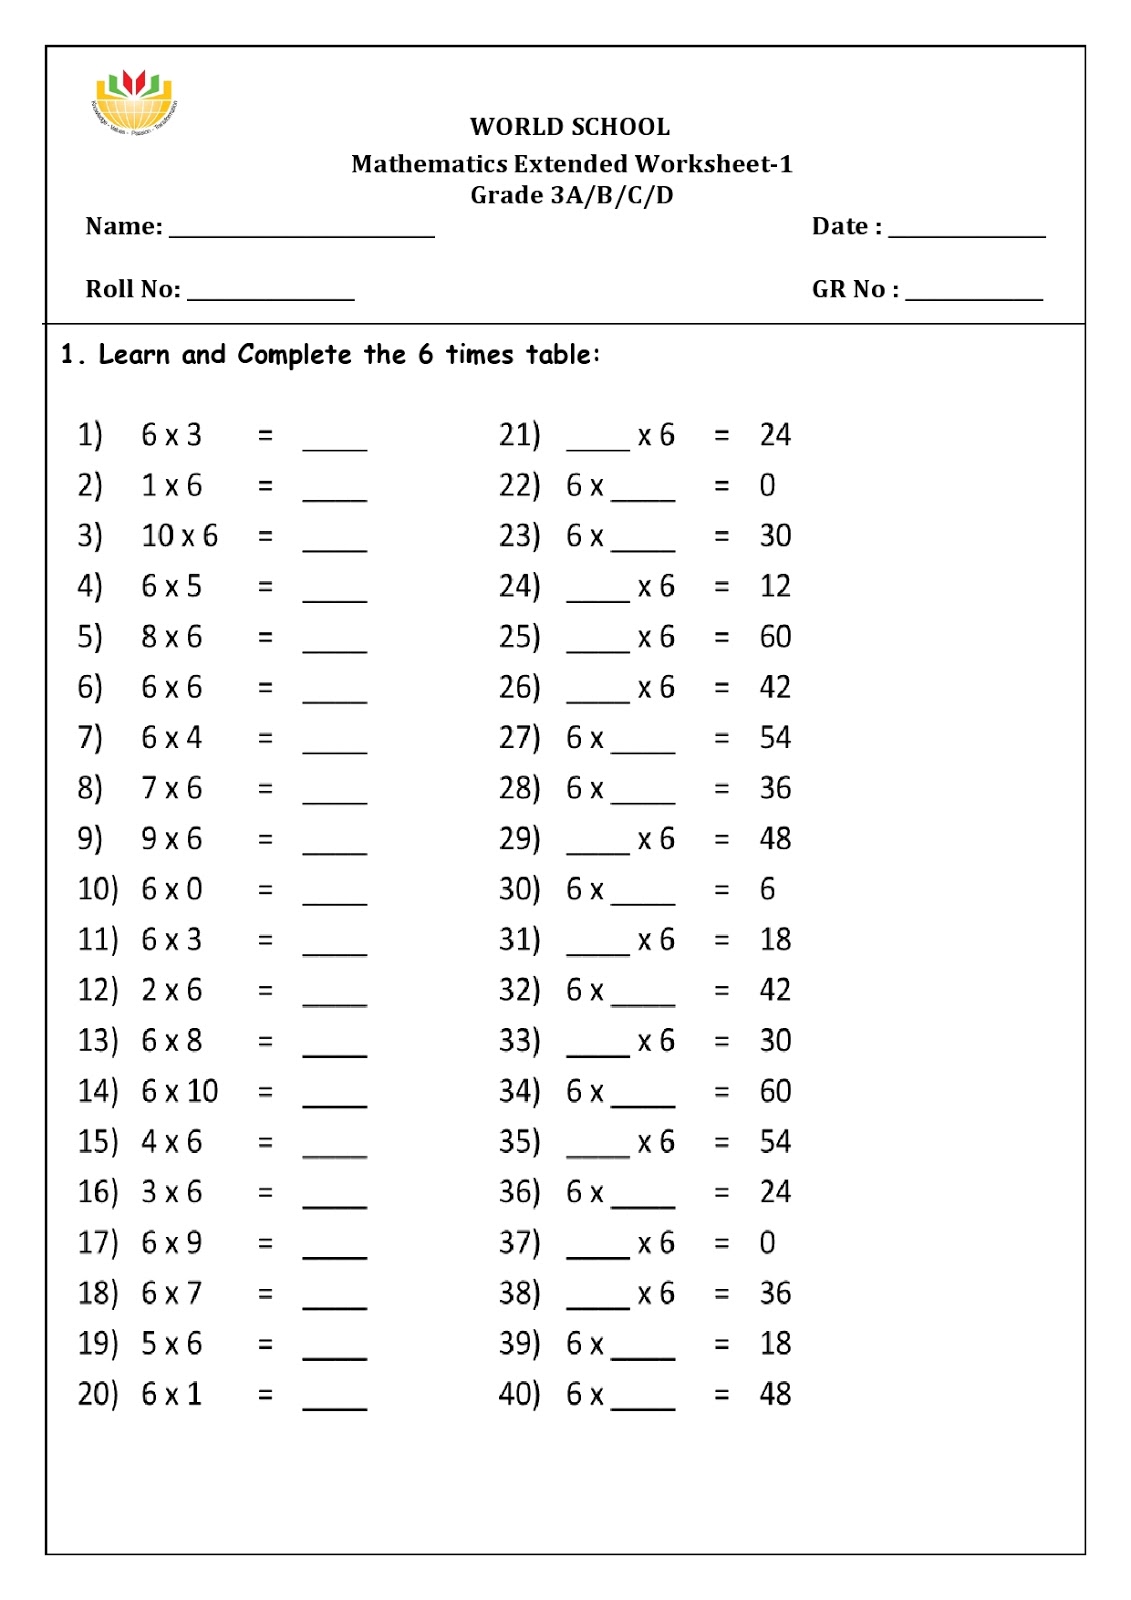 birla world school oman homework for grade 3 as on 13092018